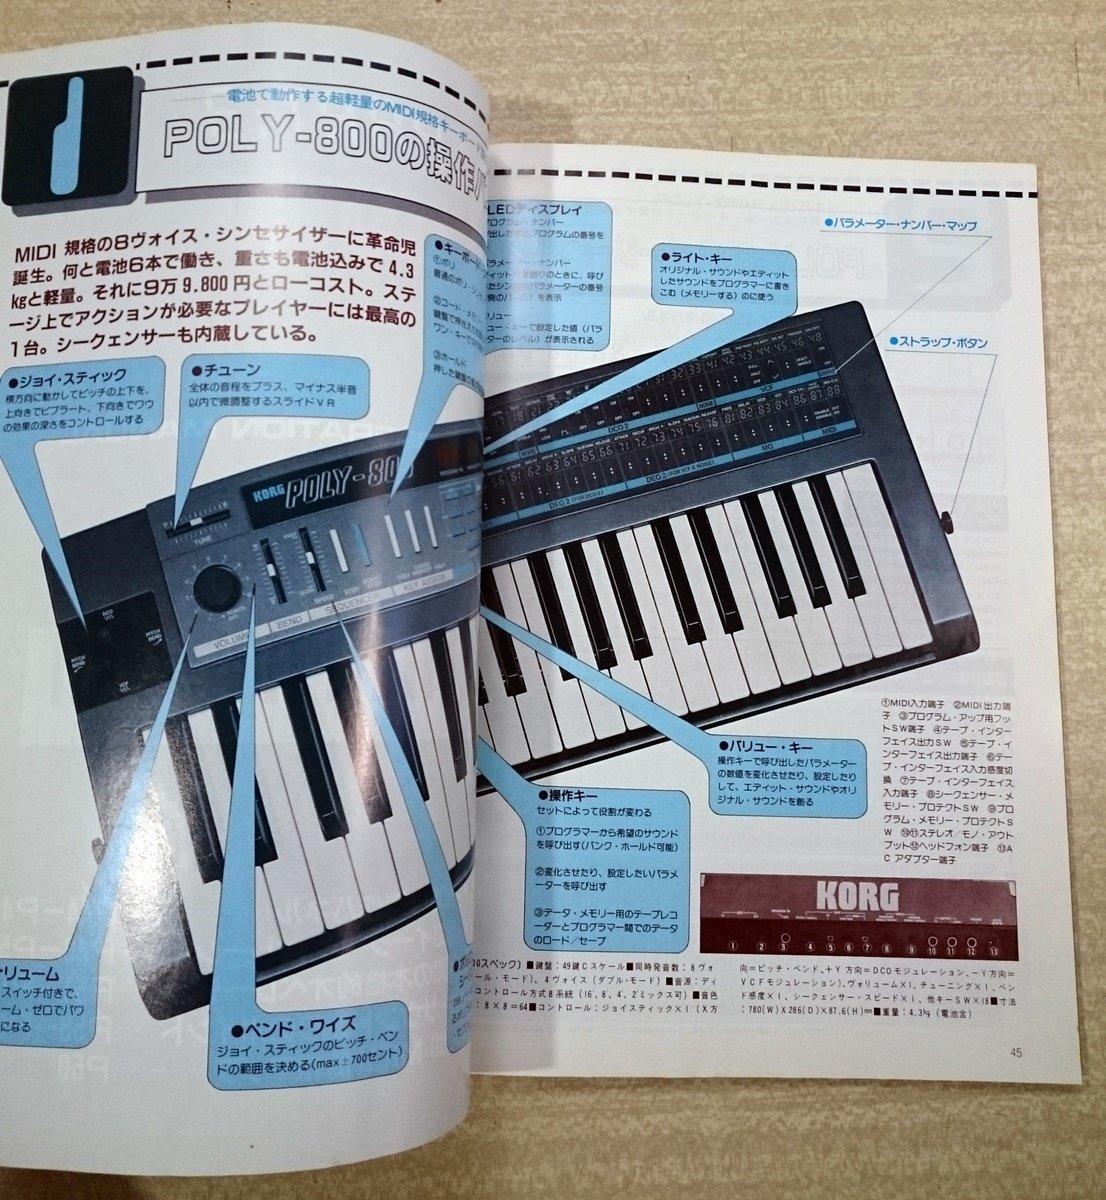 [W3518] Rockin’f 別冊 最新鋭「ディジタル・キーボード操作術」/ 立東社 昭和58年12月25日発行 YAMAHA DX7 Roland JX-3P KORG Poly-800_画像8